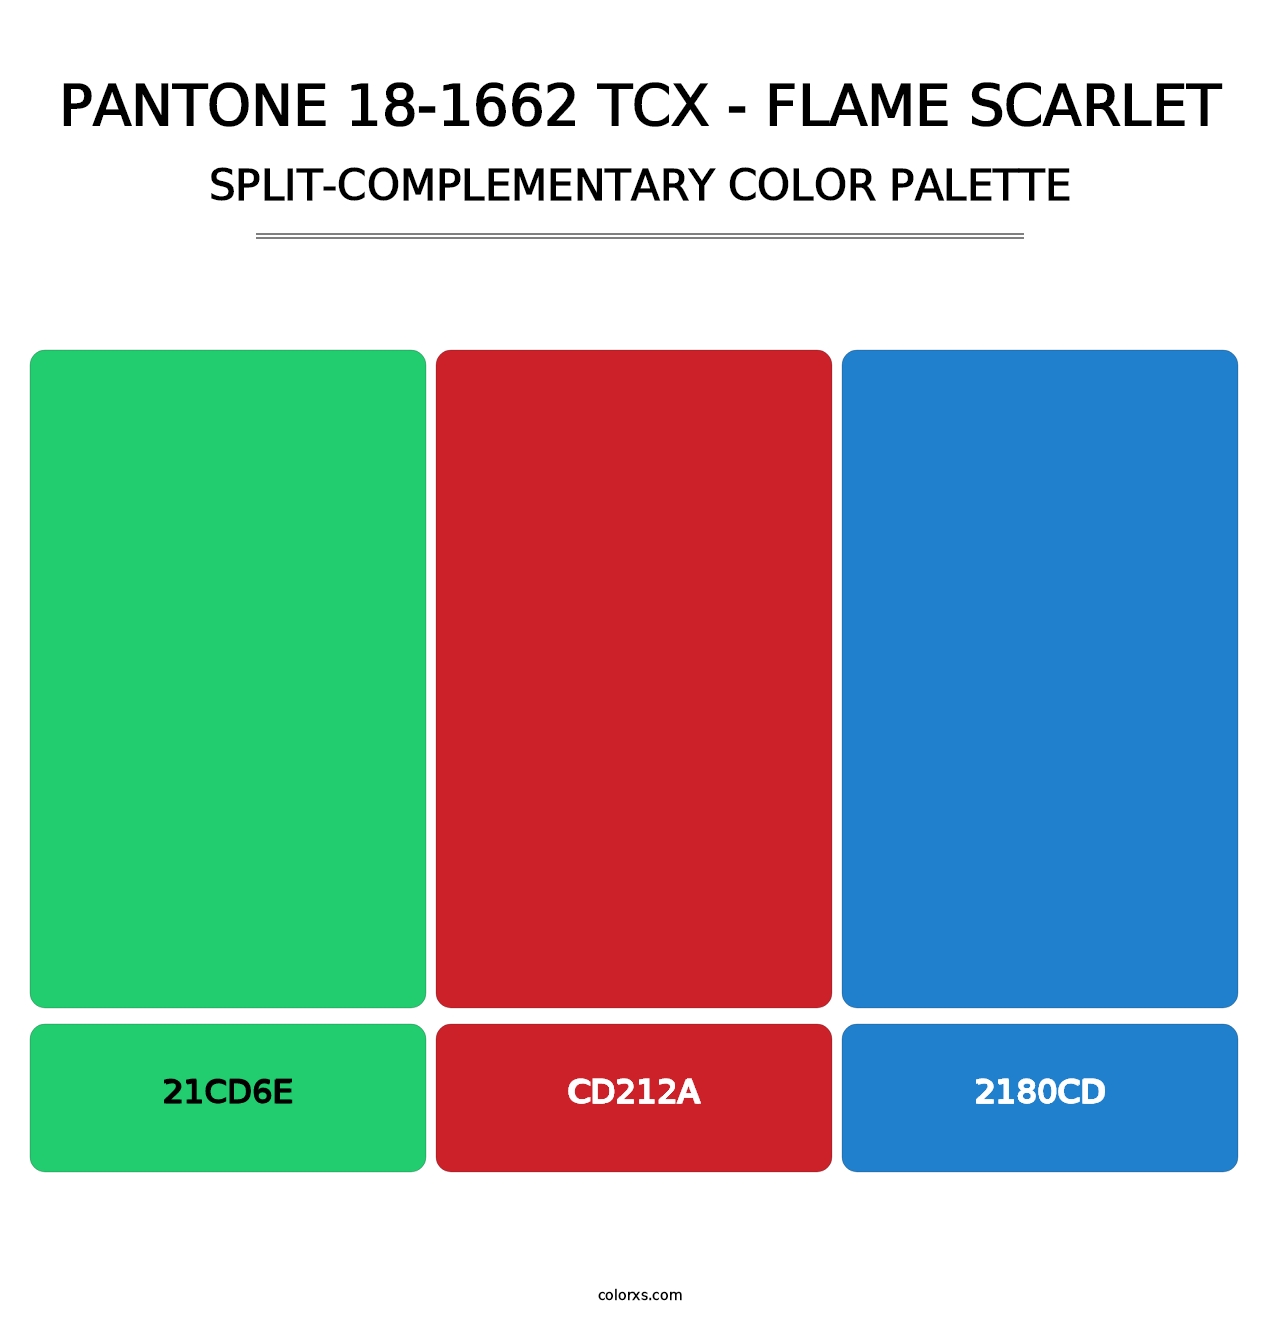 PANTONE 18-1662 TCX - Flame Scarlet - Split-Complementary Color Palette